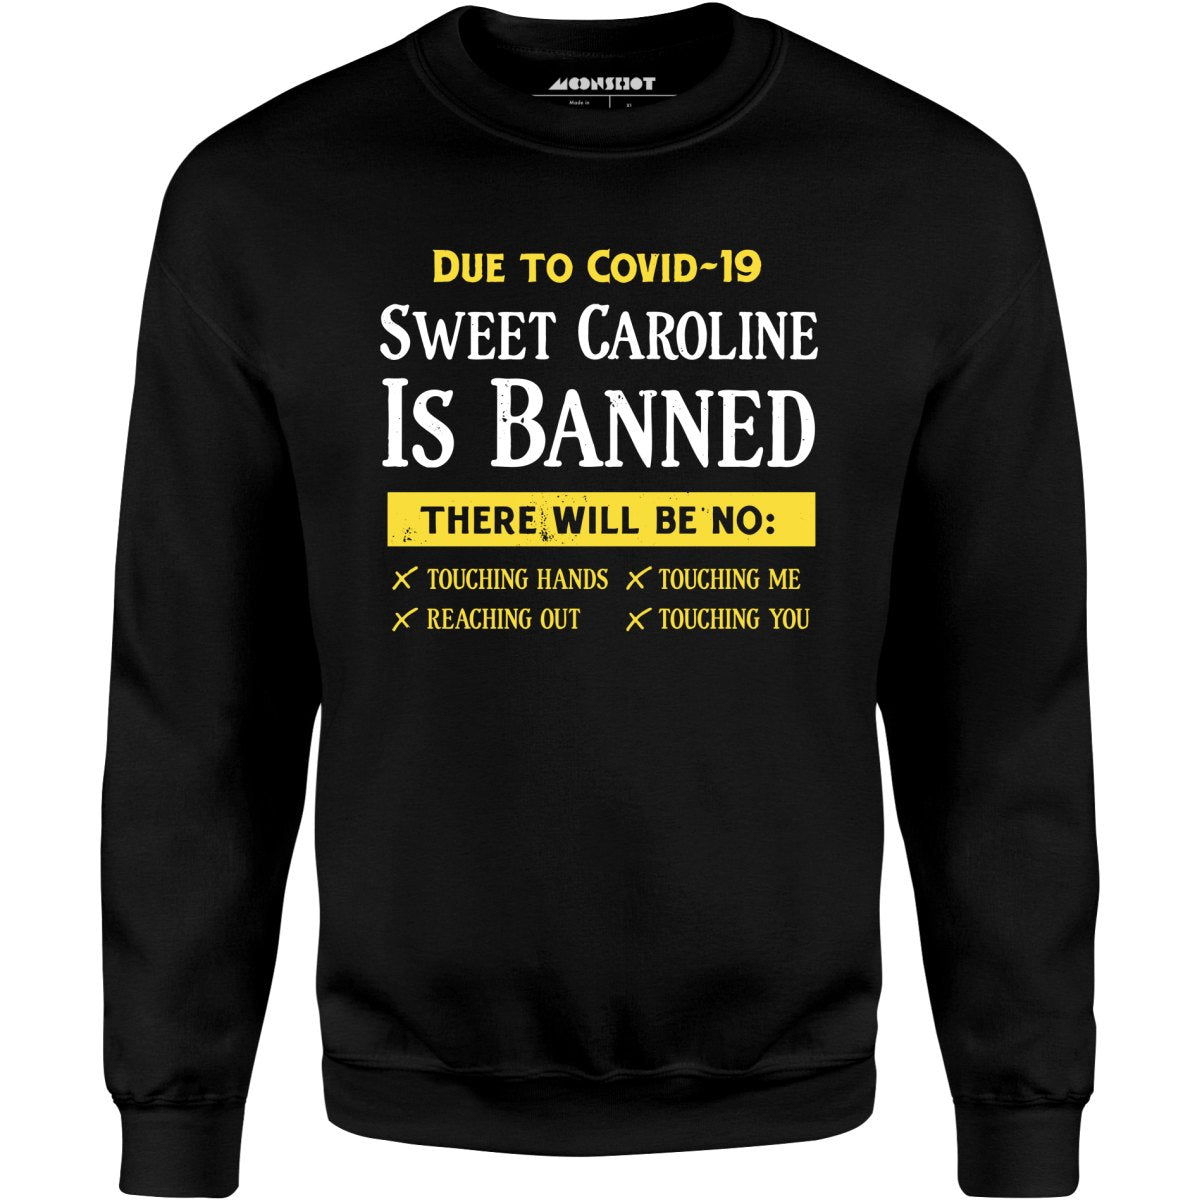 Sweet Caroline is Banned - Unisex Sweatshirt